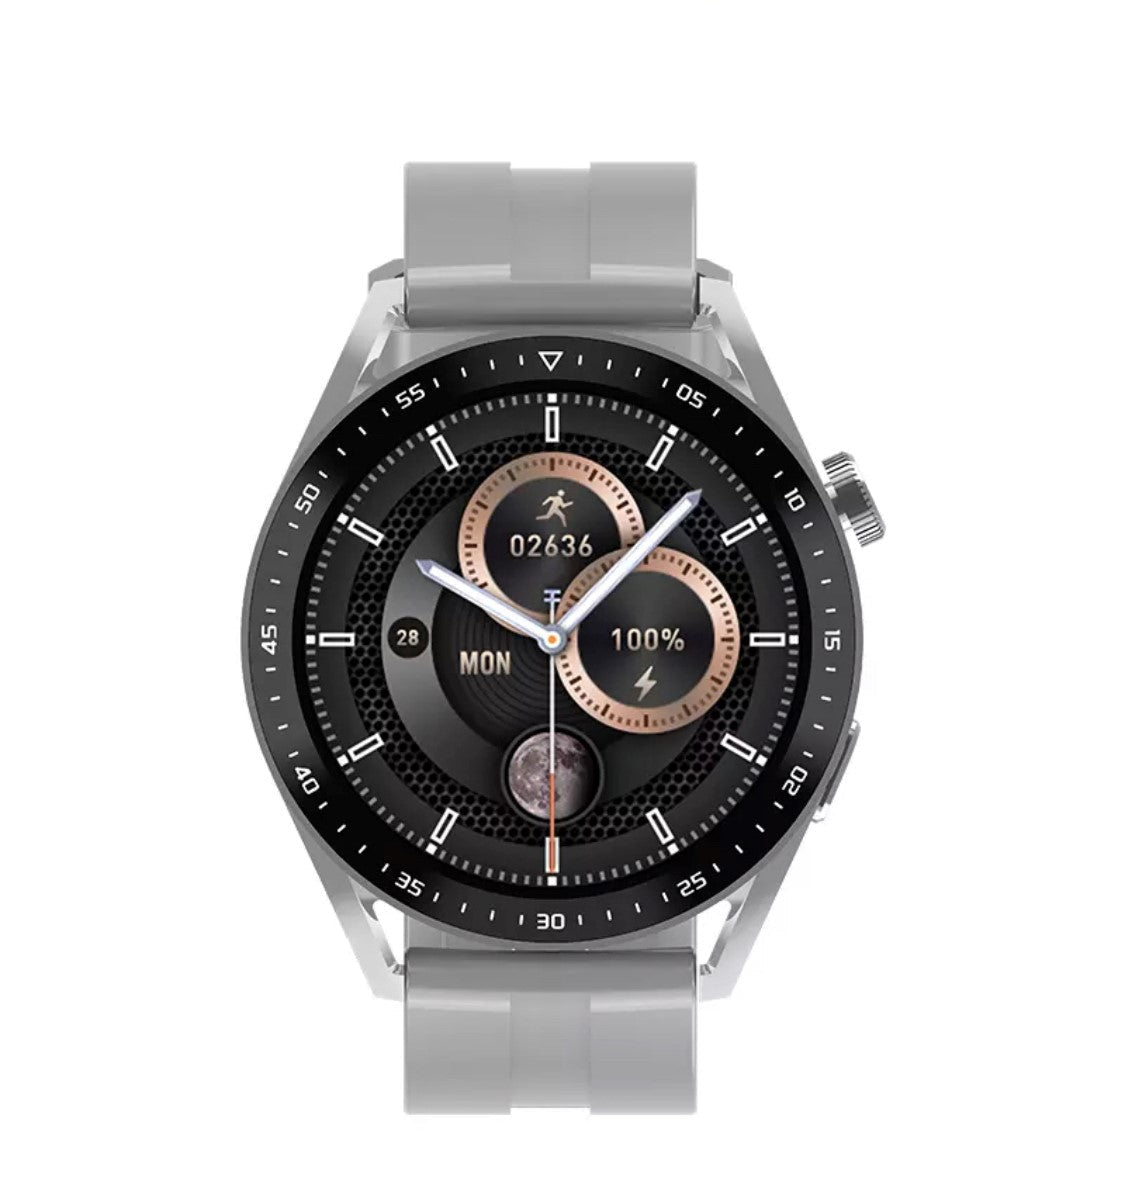 HW28 Smart Watch Brown Tan Smart Watch South Africa